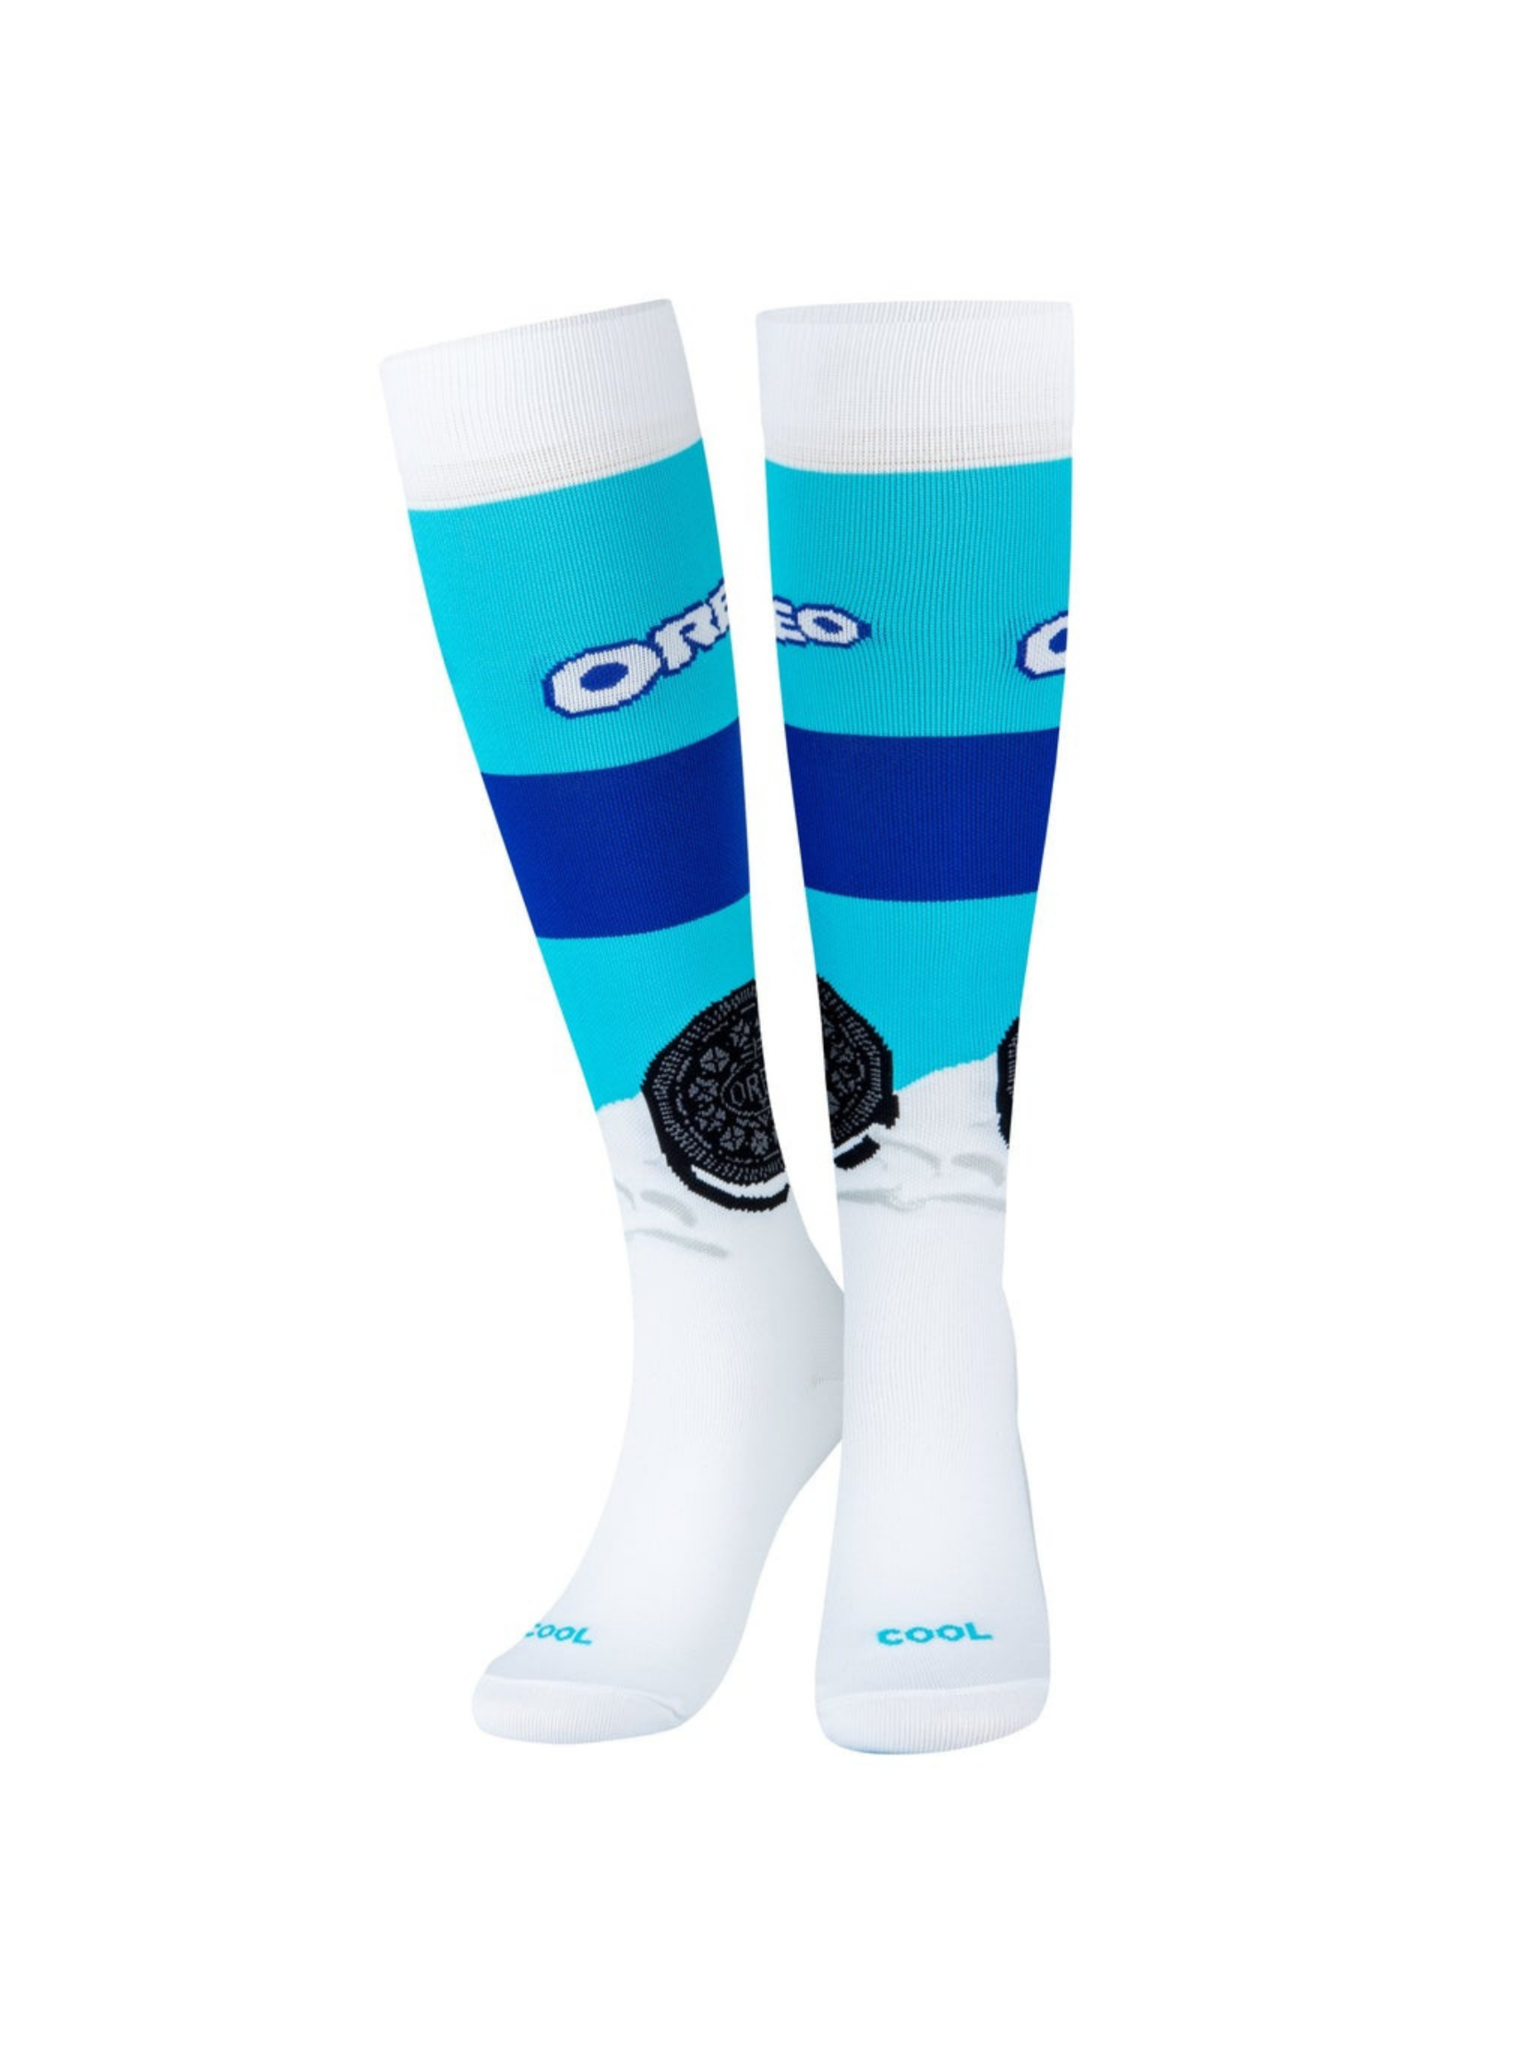 Oreo Compression Socks